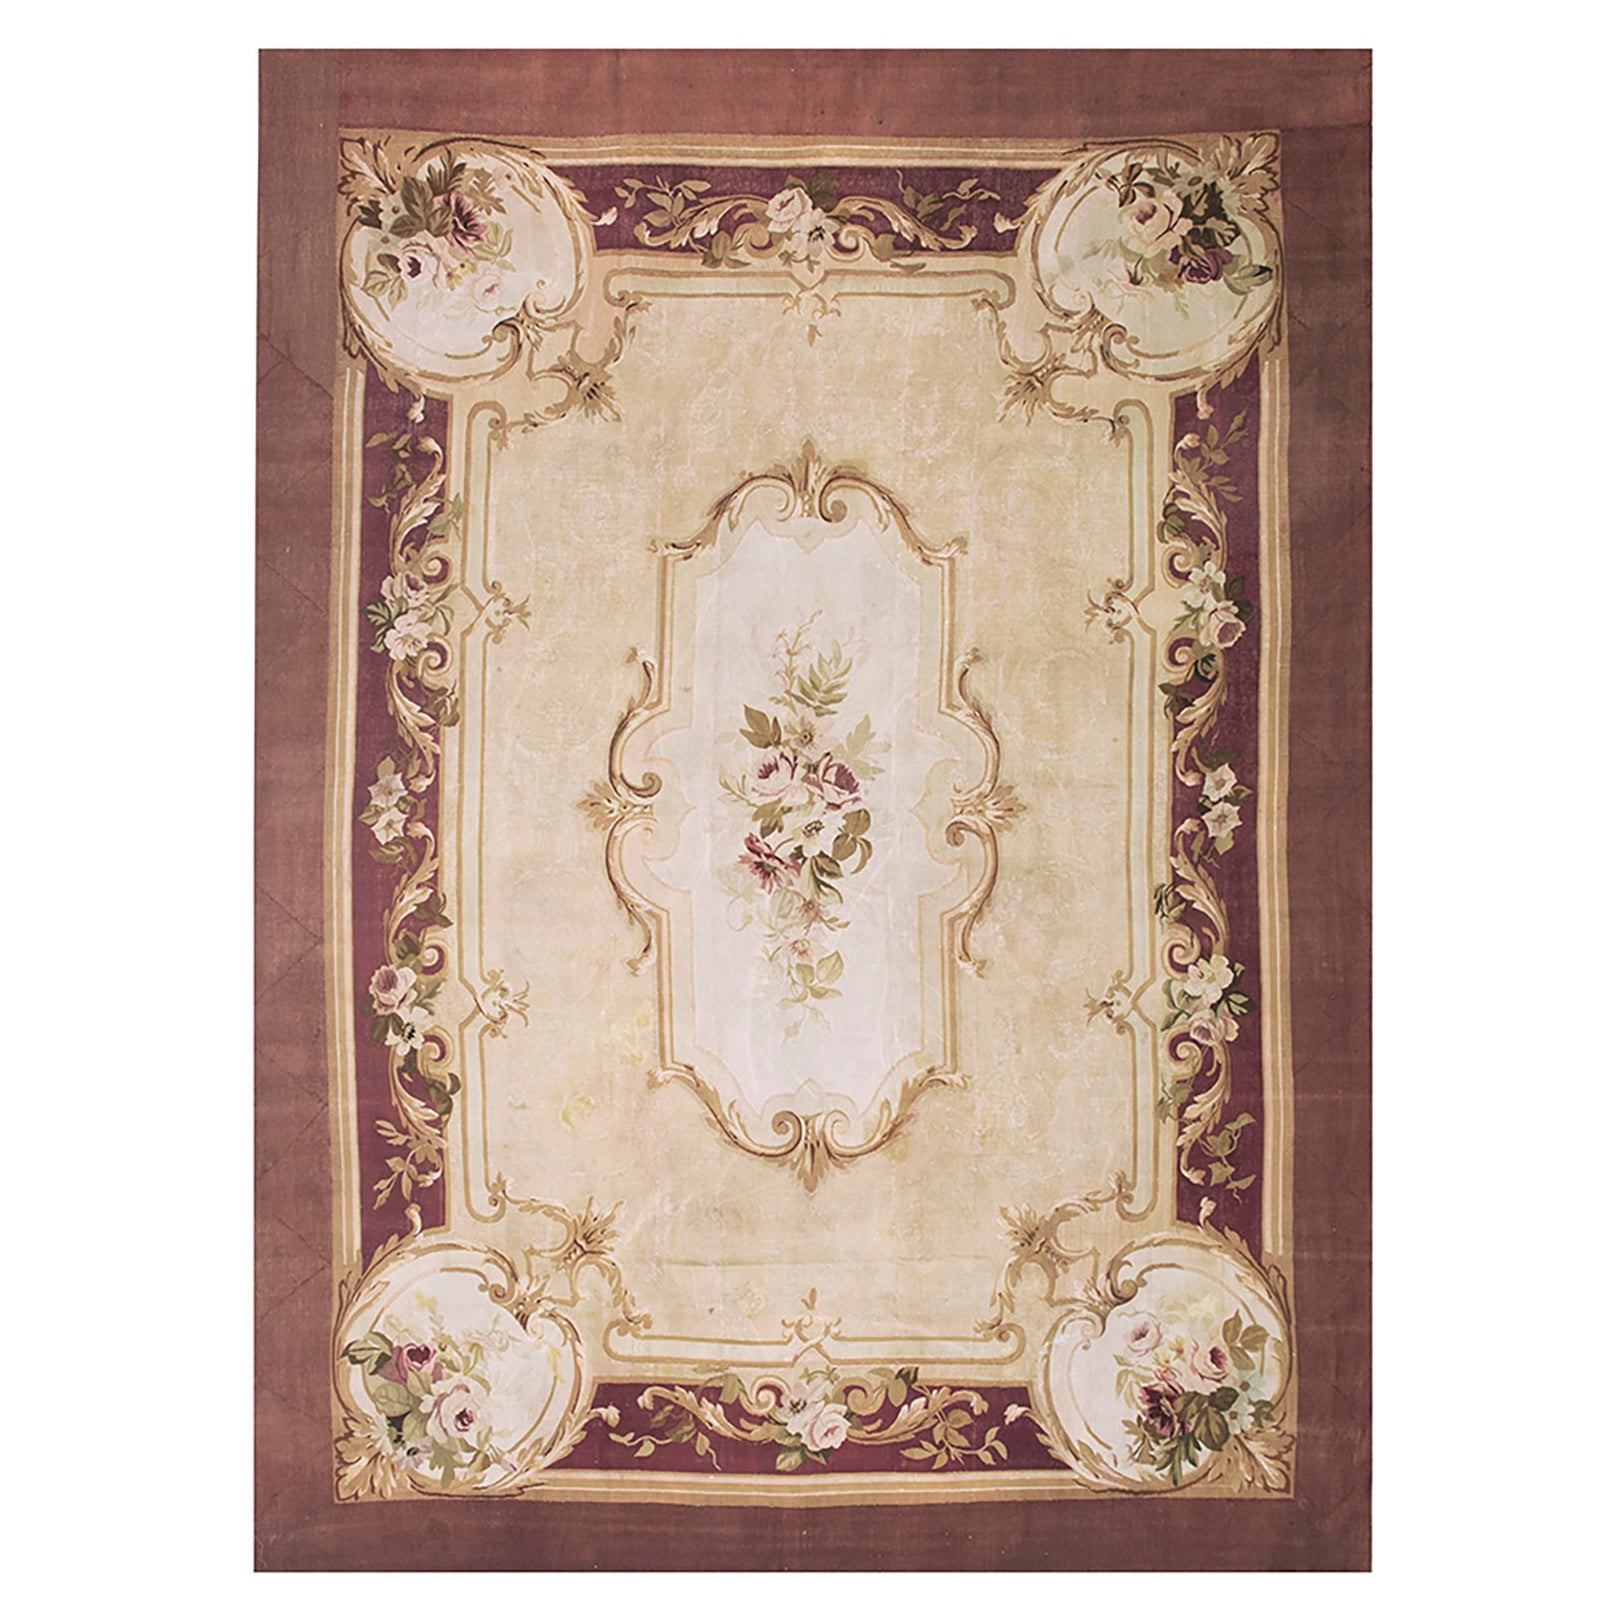 19th Century French Aubusson Carpet ( 9'3' x 13' - 282 x 396 )